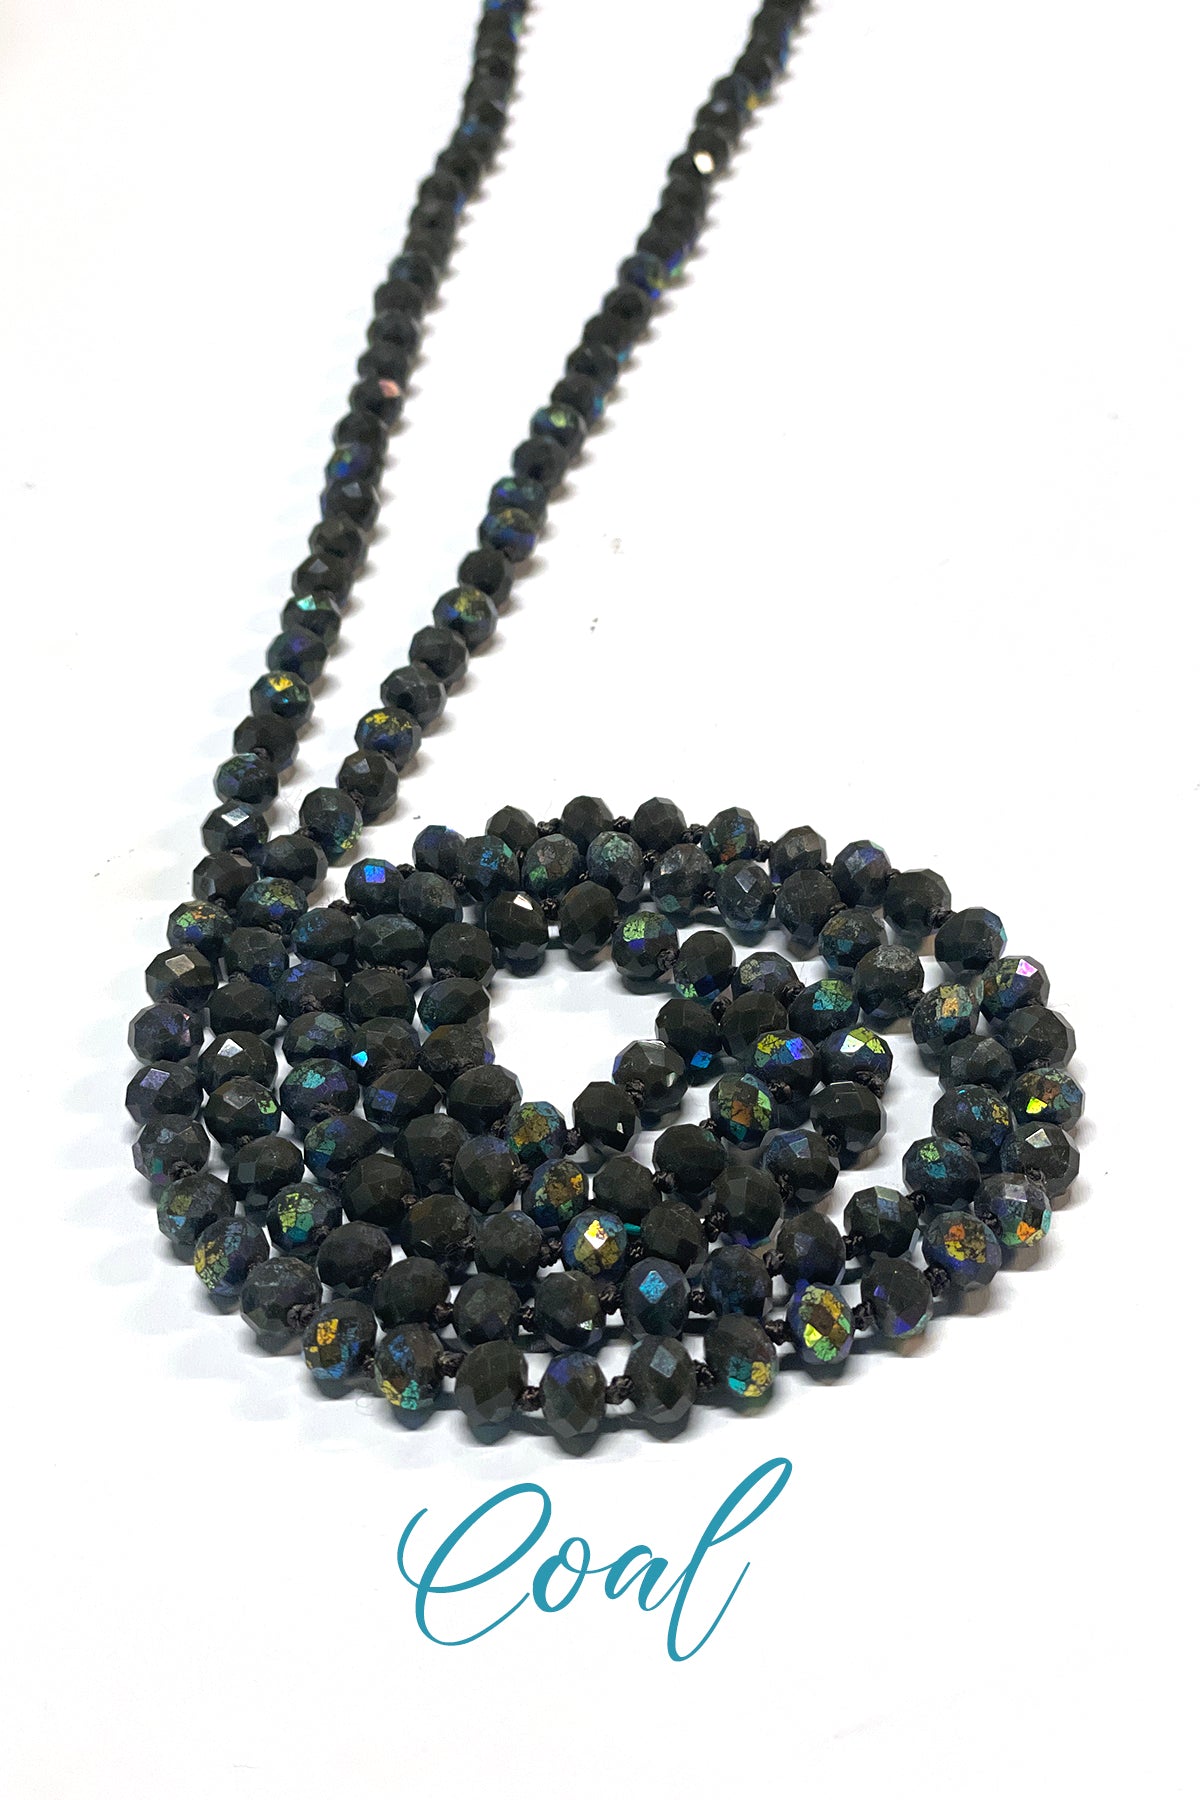 Wrap Necklaces 60" - All Colors jewelry ViVi Liam Jewelry Coal 